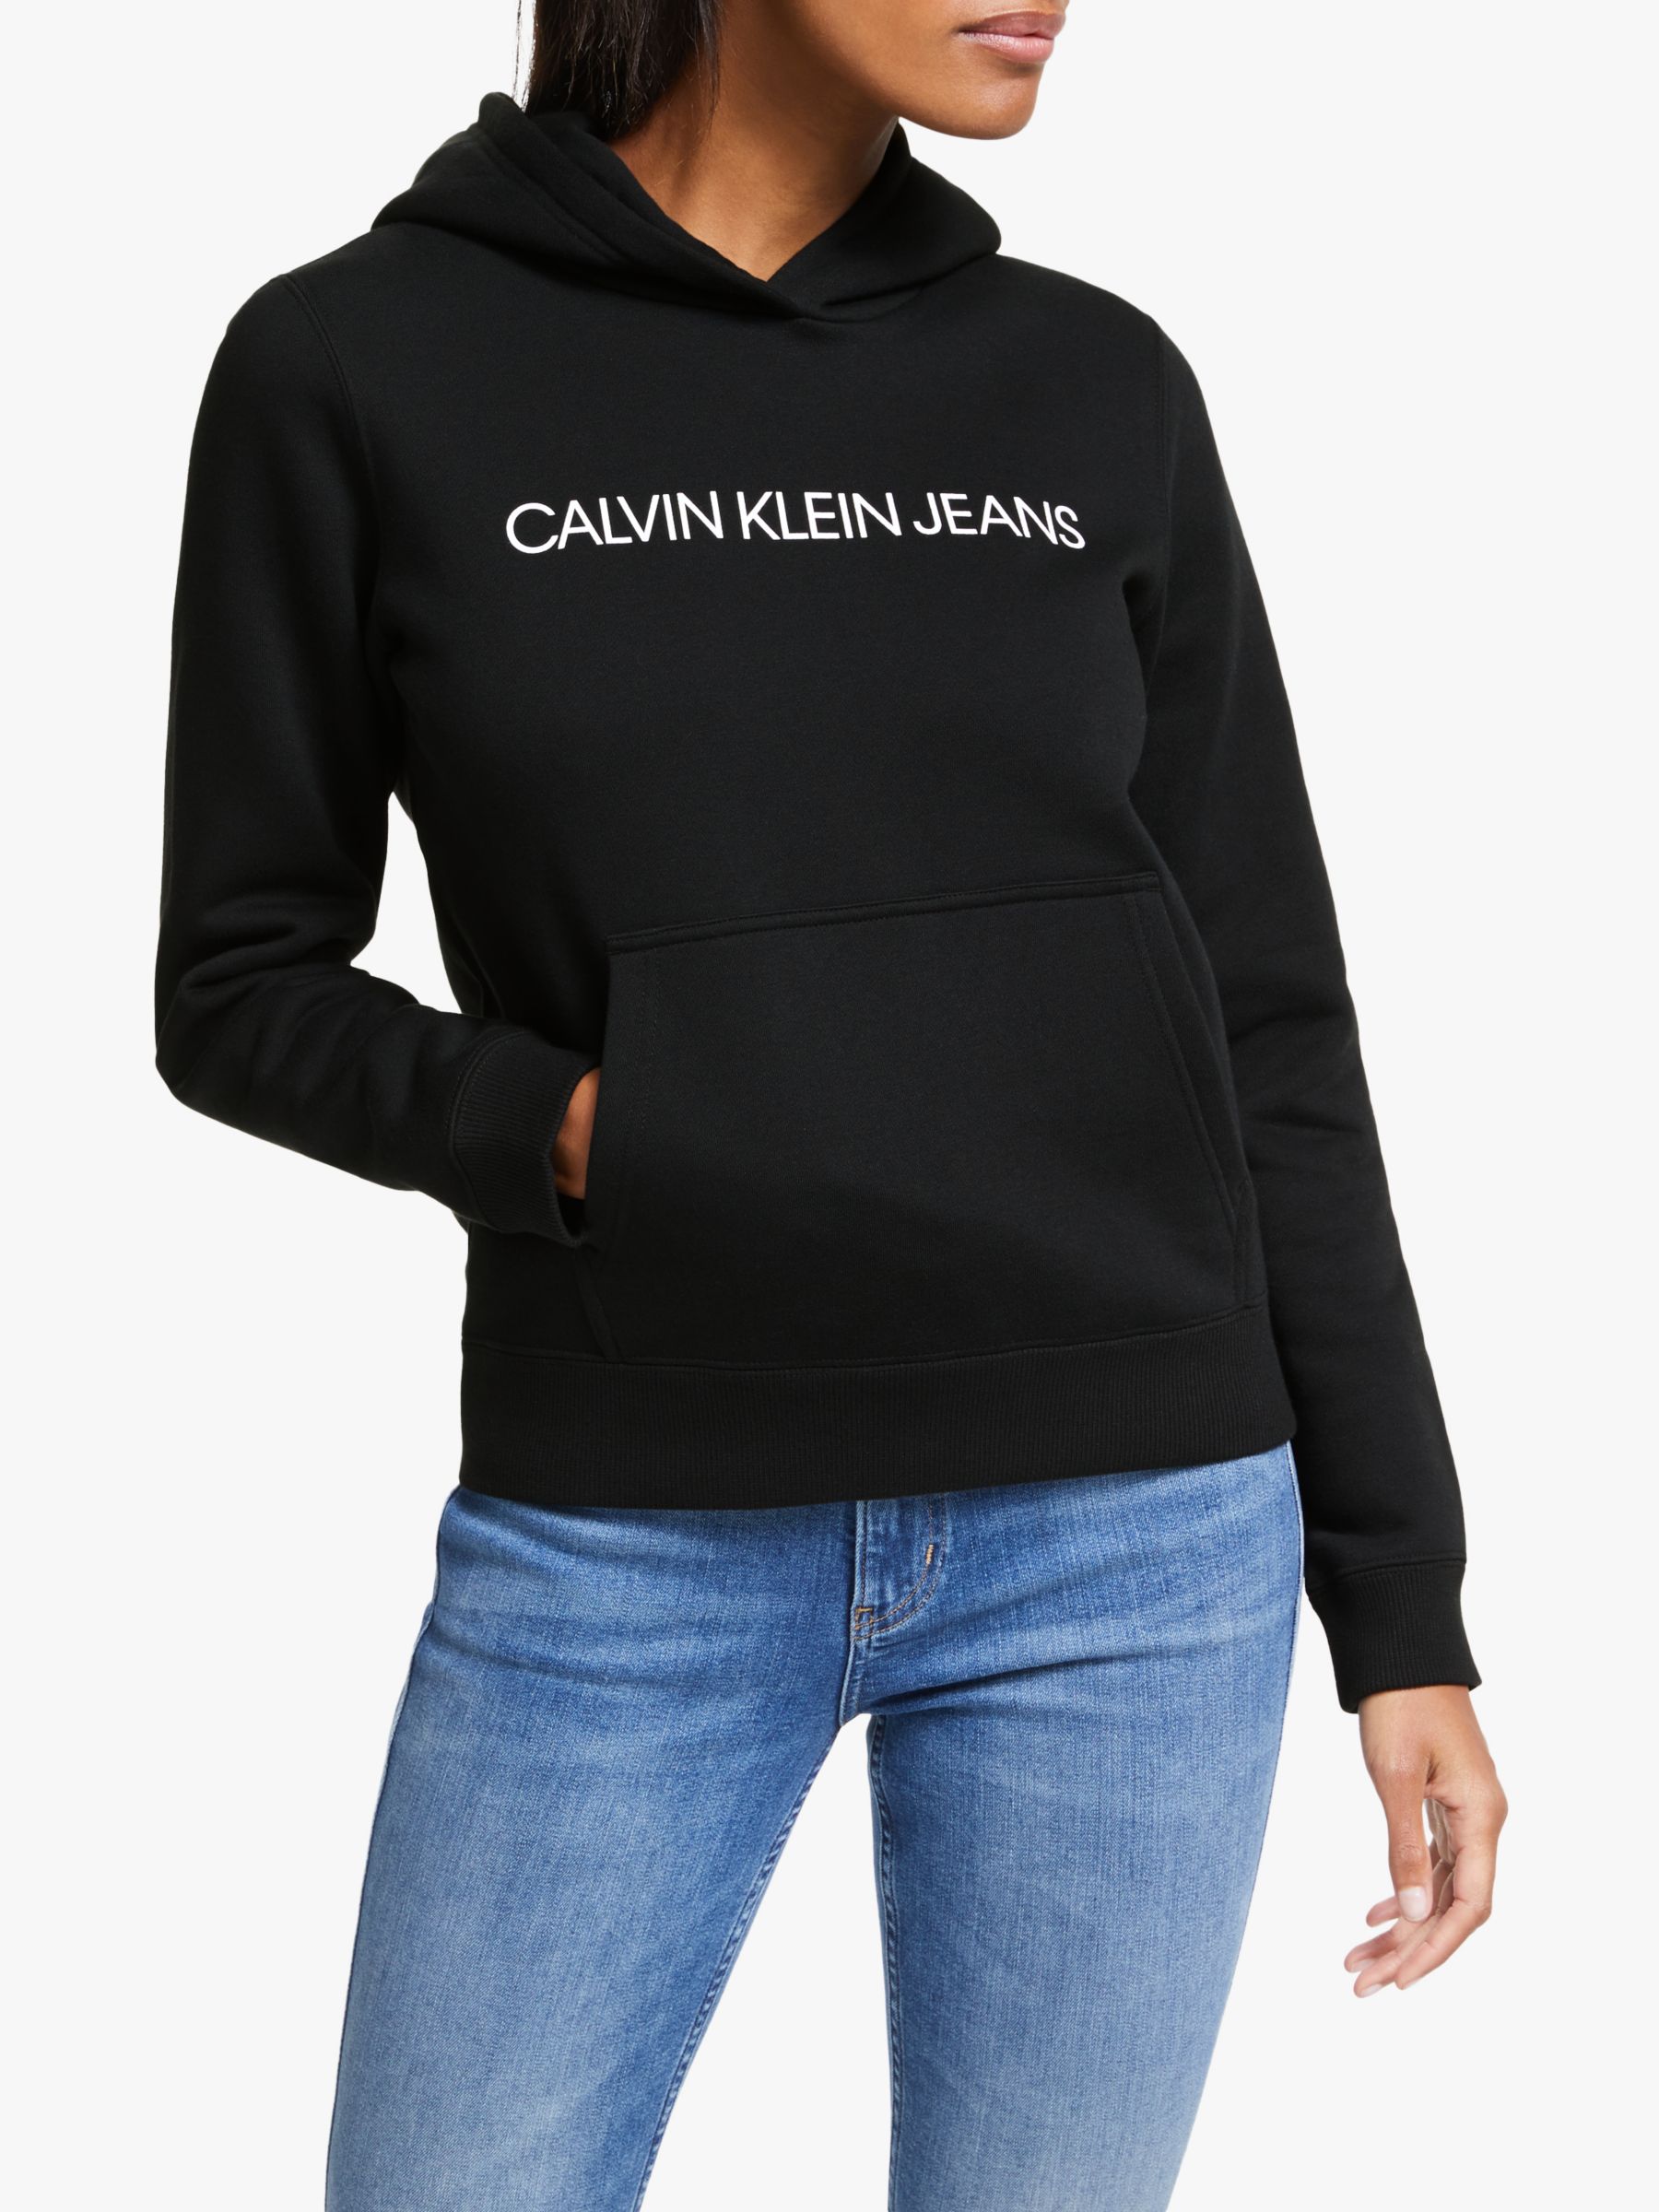 calvin klein jean hoodie